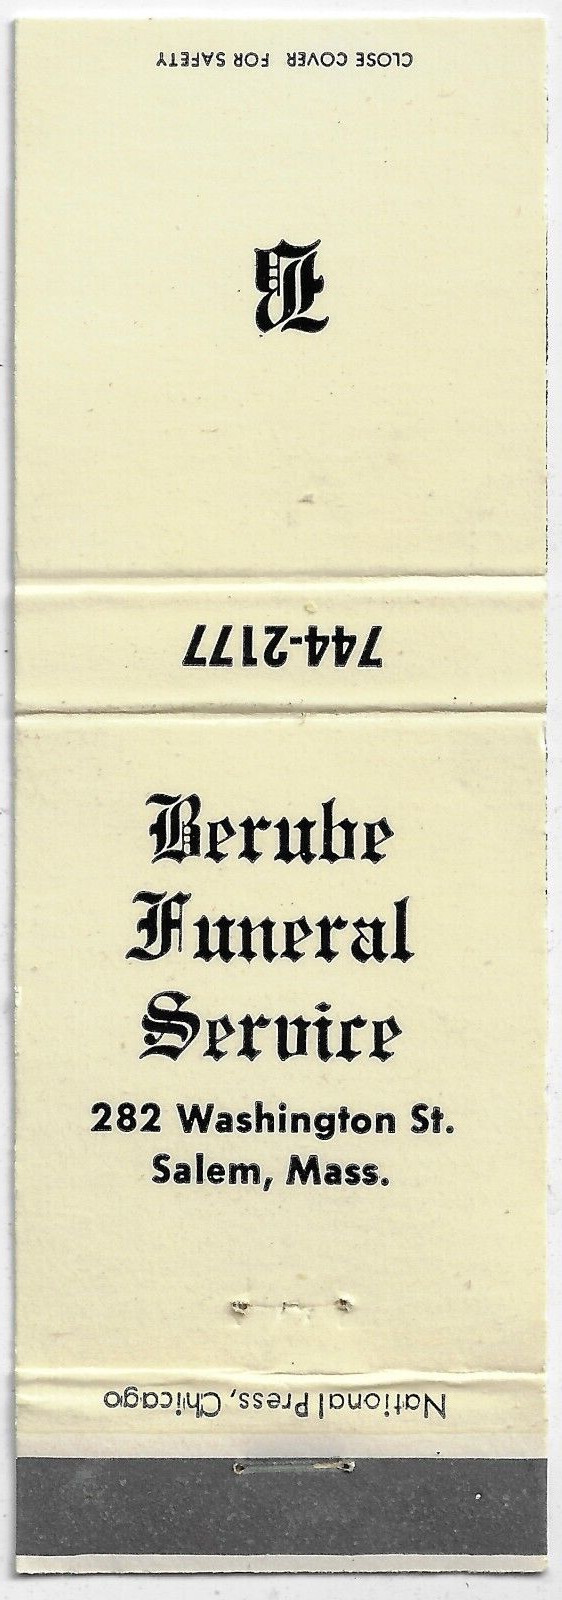 Empty FS Matchbook Cover Berube Funeral Service Salem Mass.